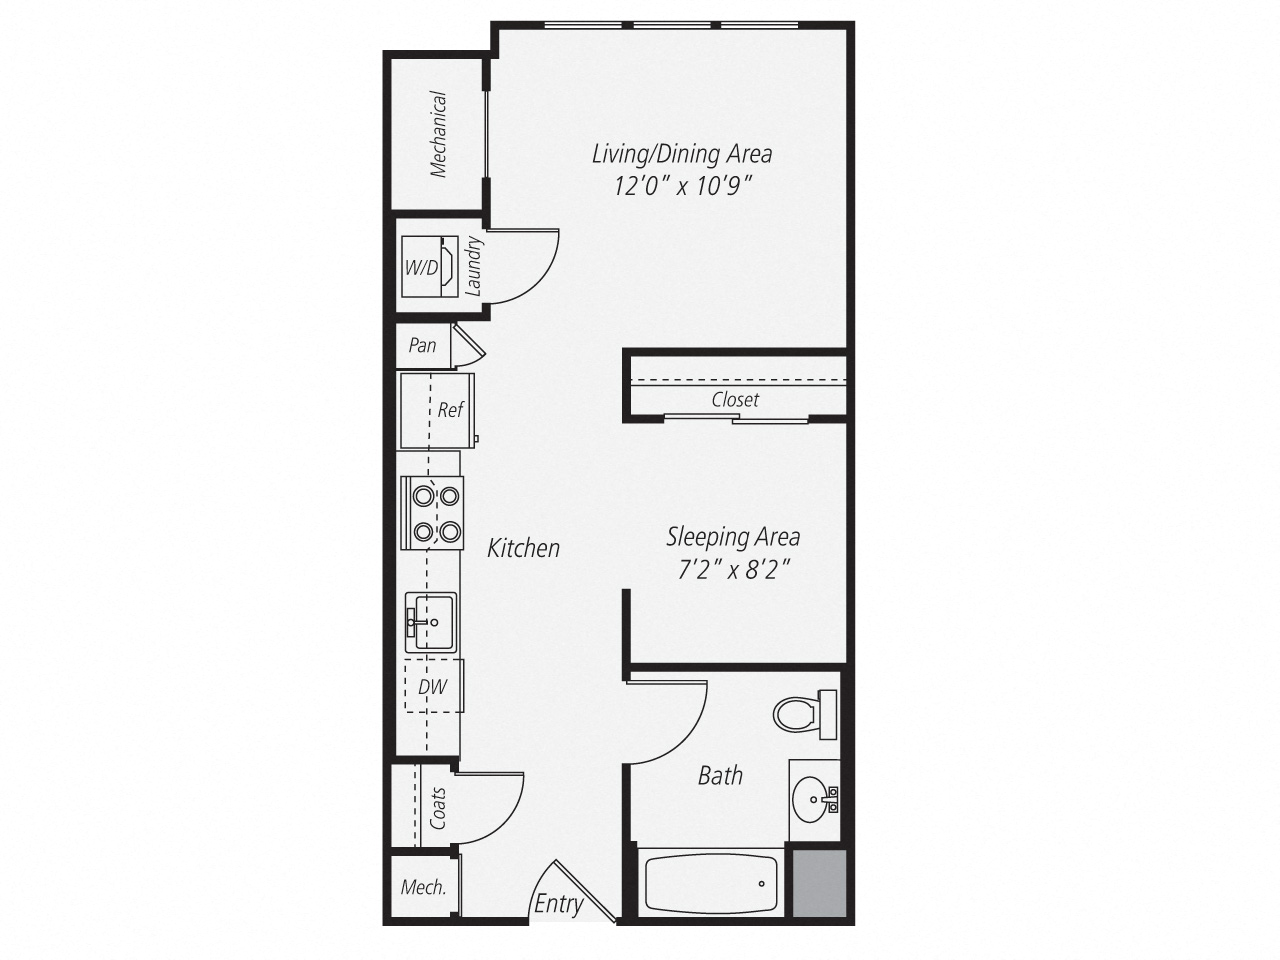 Floorplan for Apartment #325, 0 bedroom unit at Halstead Norwalk